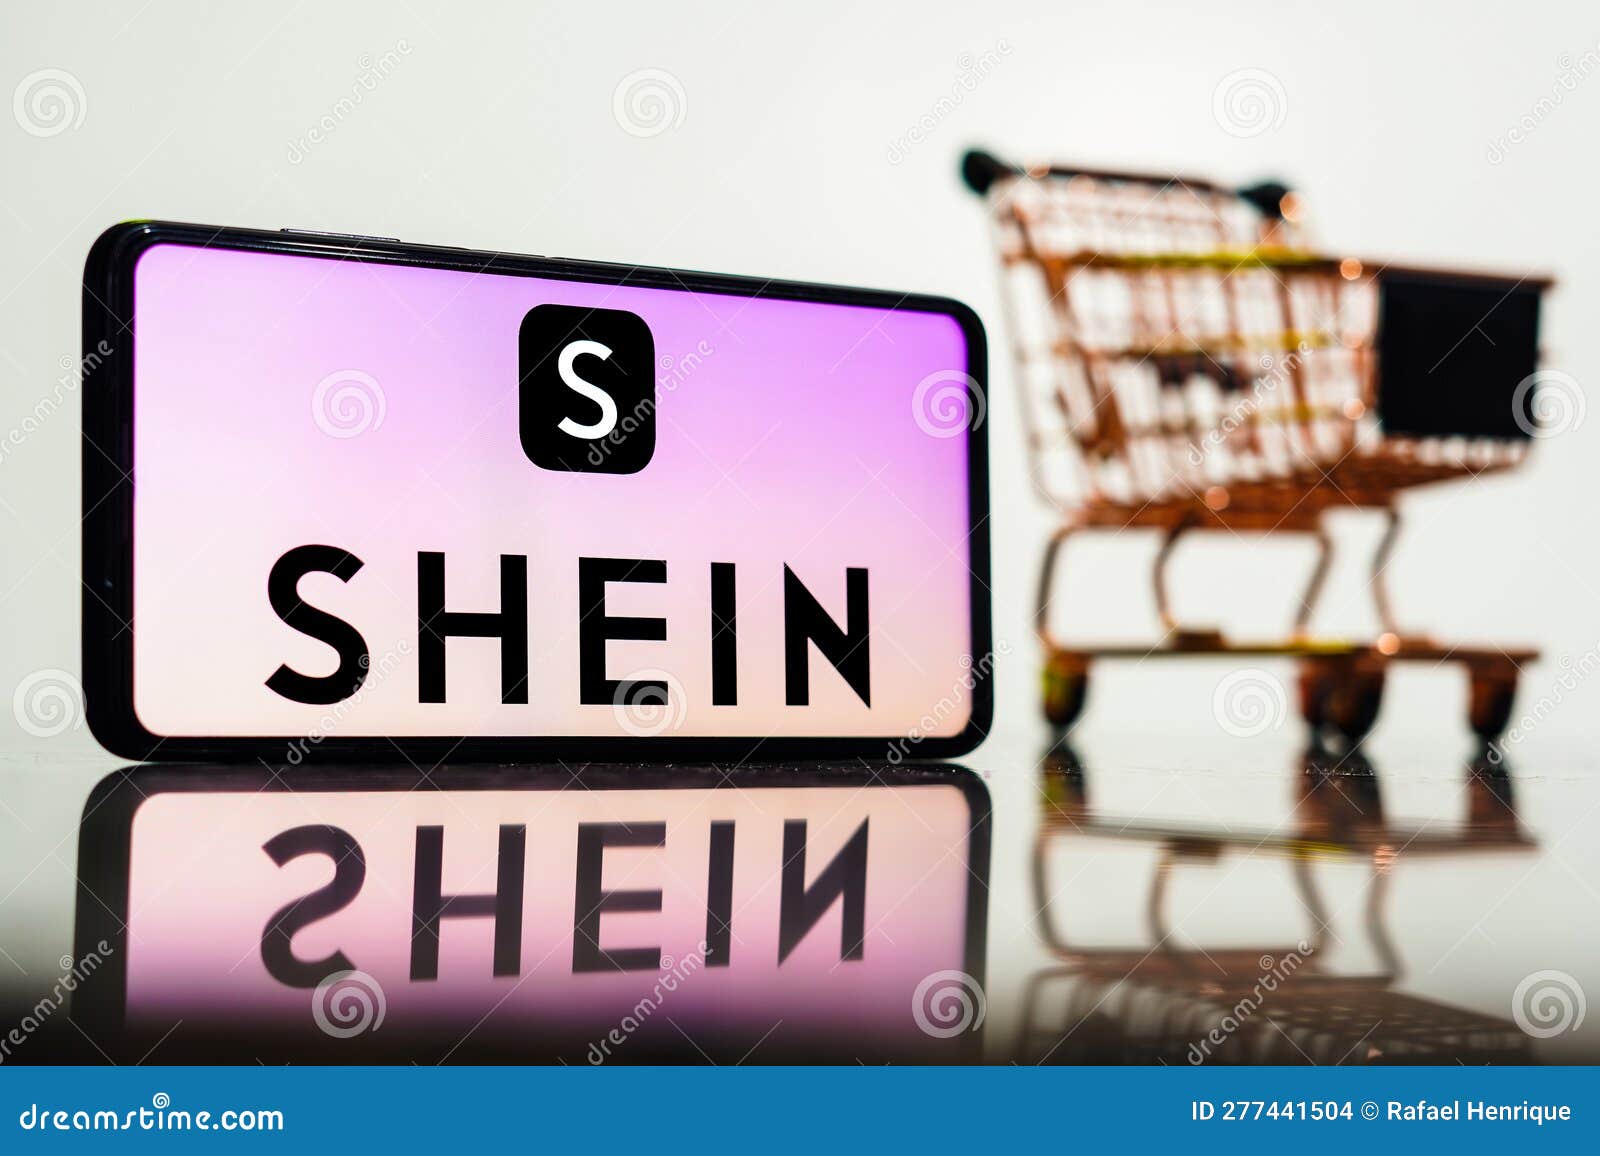 https://thumbs.dreamstime.com/z/may-brazil-photo-illustration-shein-logo-seen-displayed-smartphone-along-shopping-cart-277441504.jpg